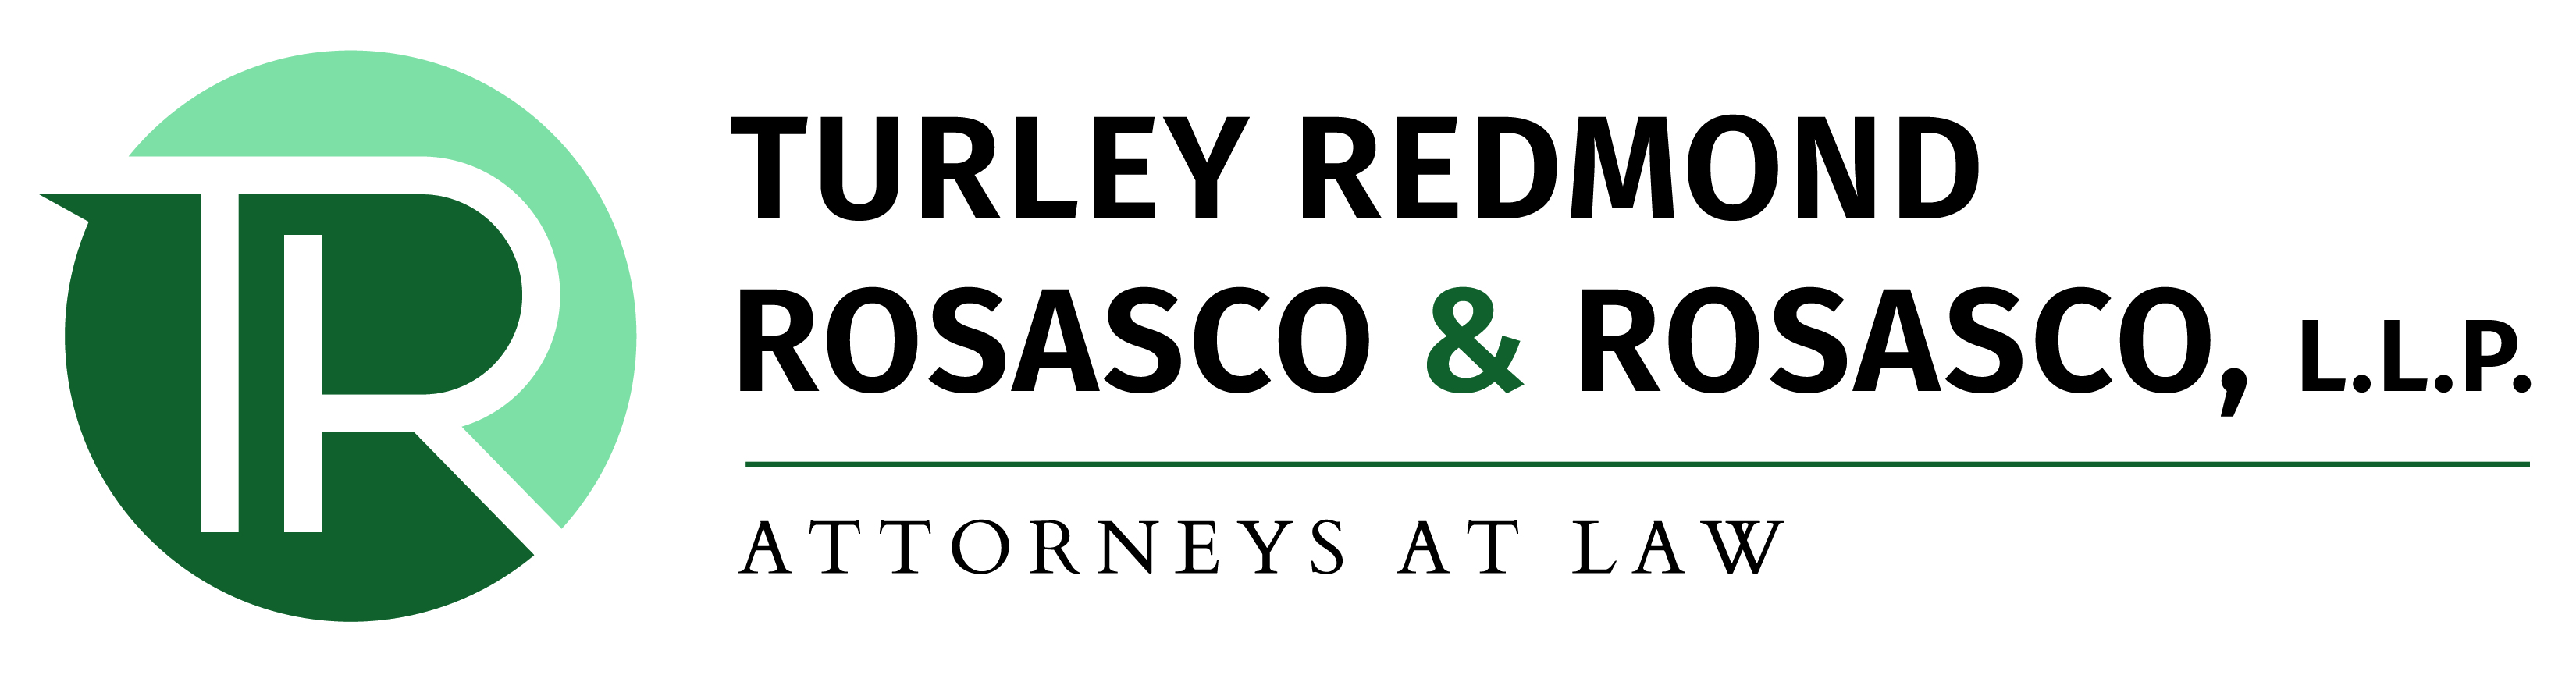 Turley, Redmond, Rosasco & Rosasco LLP